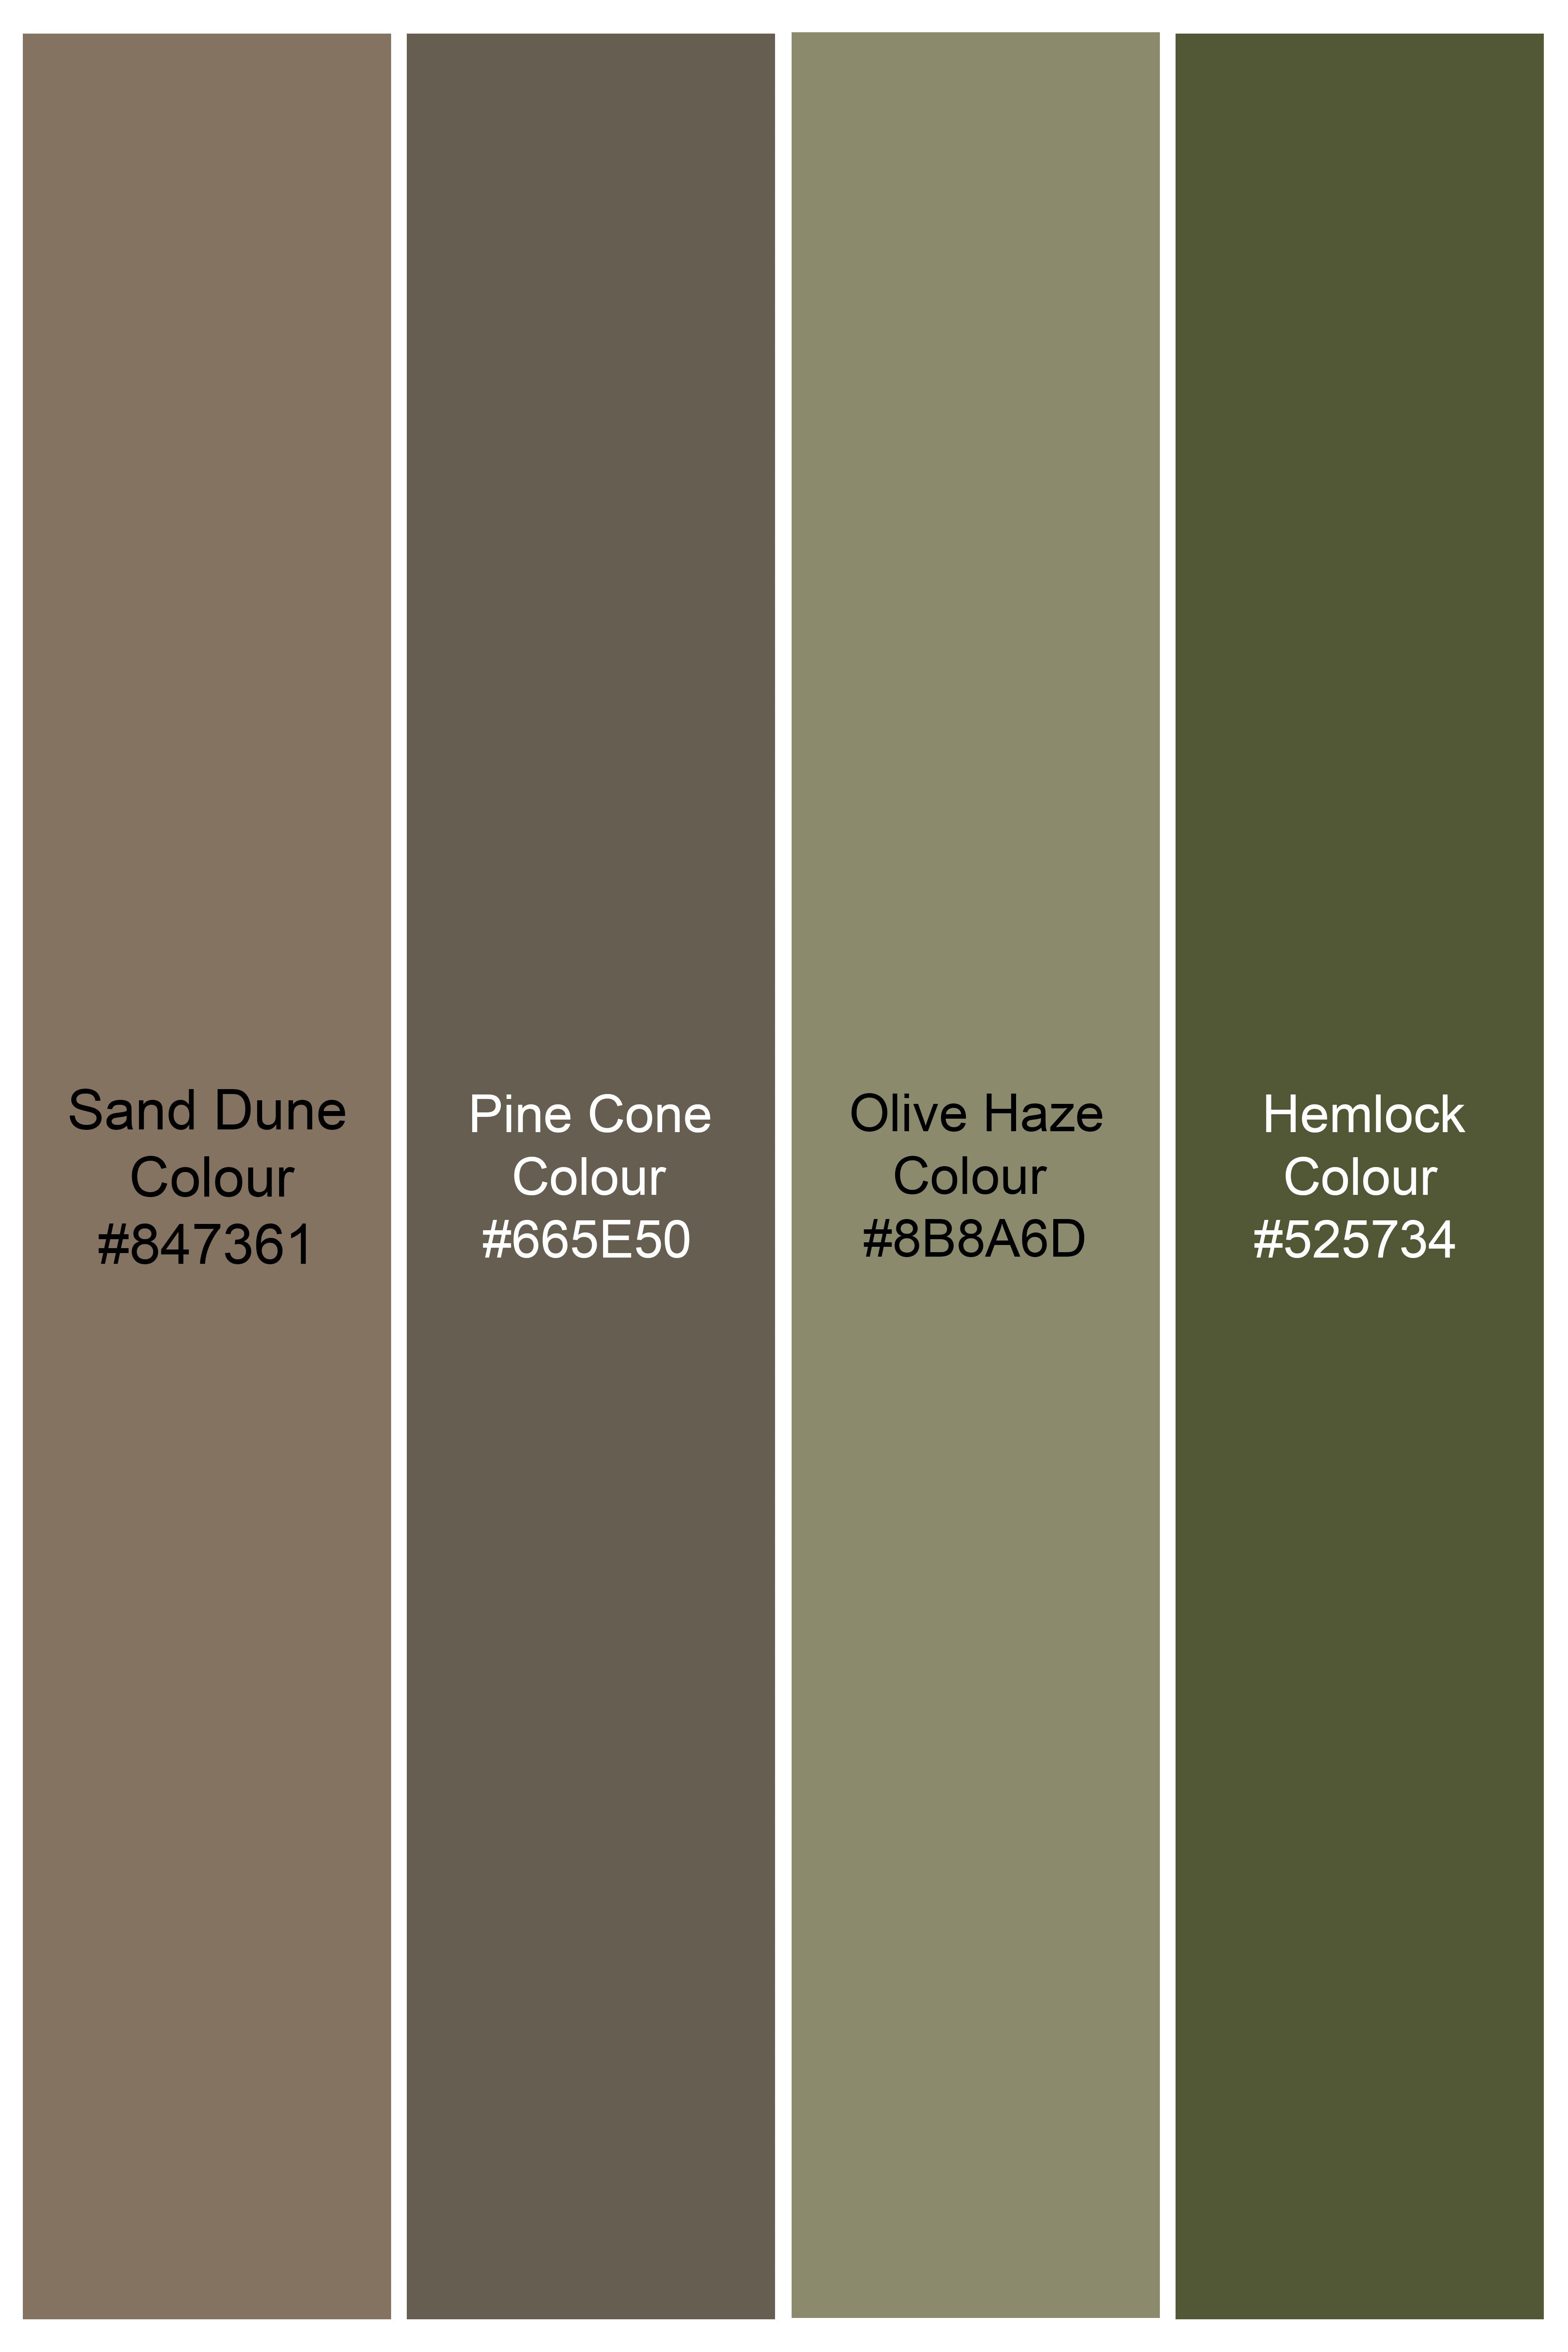 Sand Dune Brown and Hemlock Green Camouflage Cargo Denim J241-30, J241-32, J241-34, J241-36, J241-38, J241-40